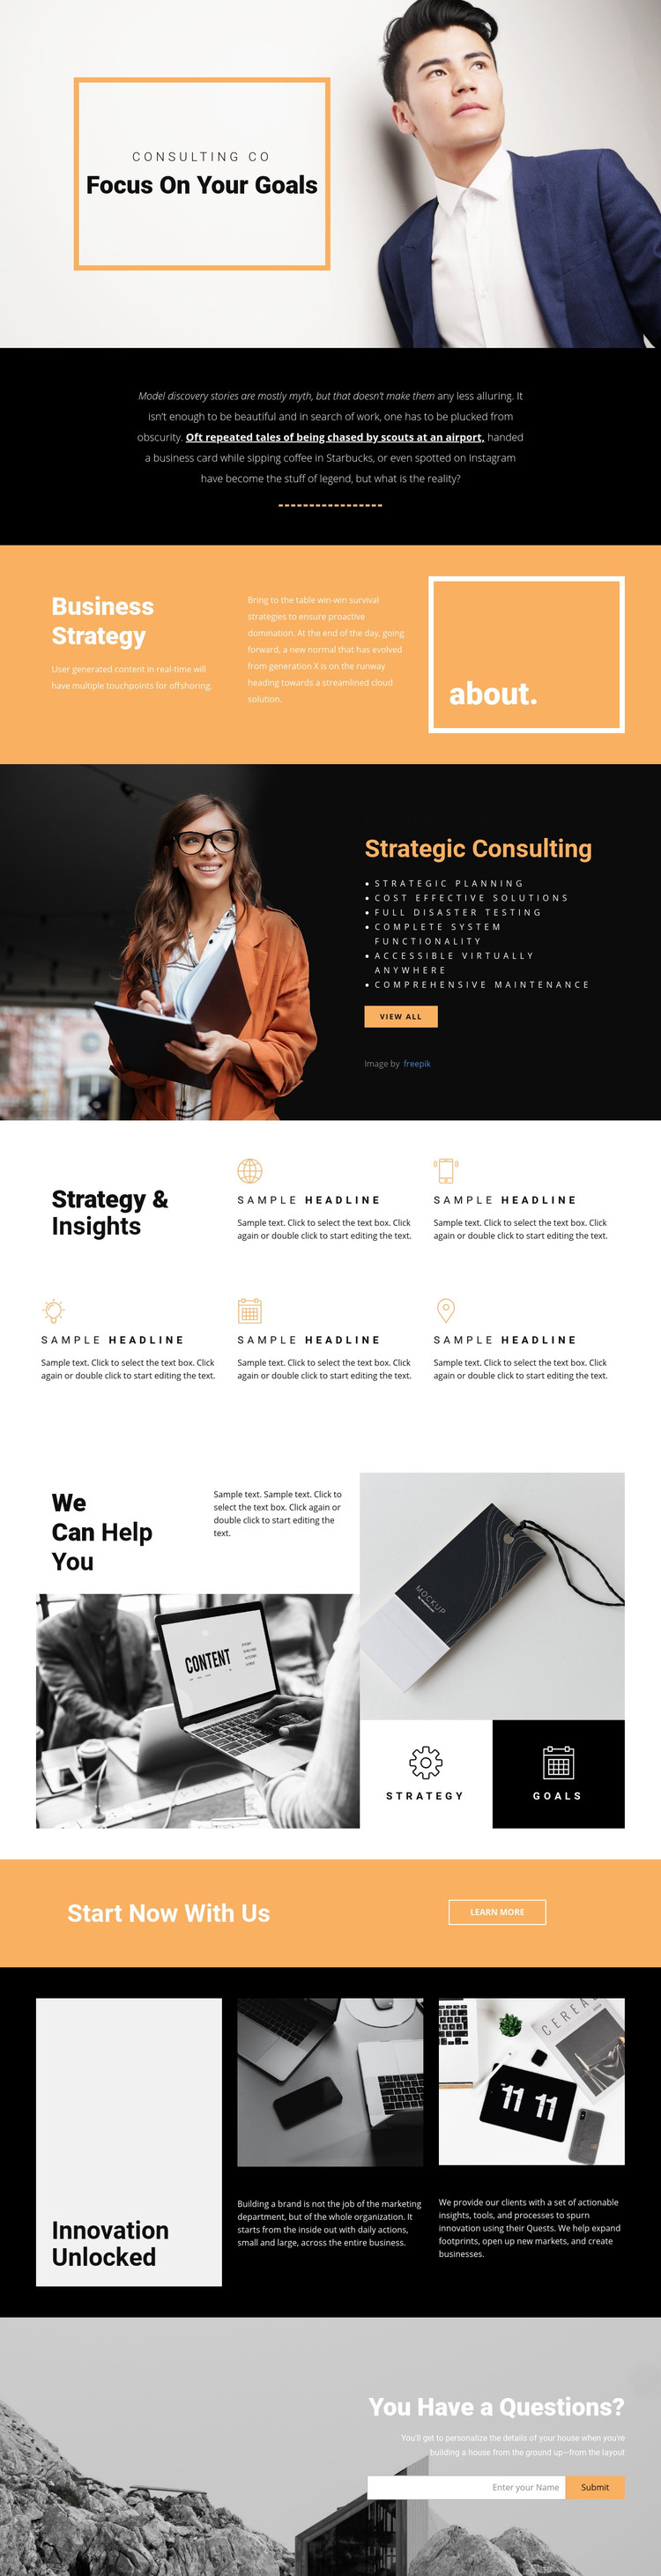 Goals for modern business  Homepage Design